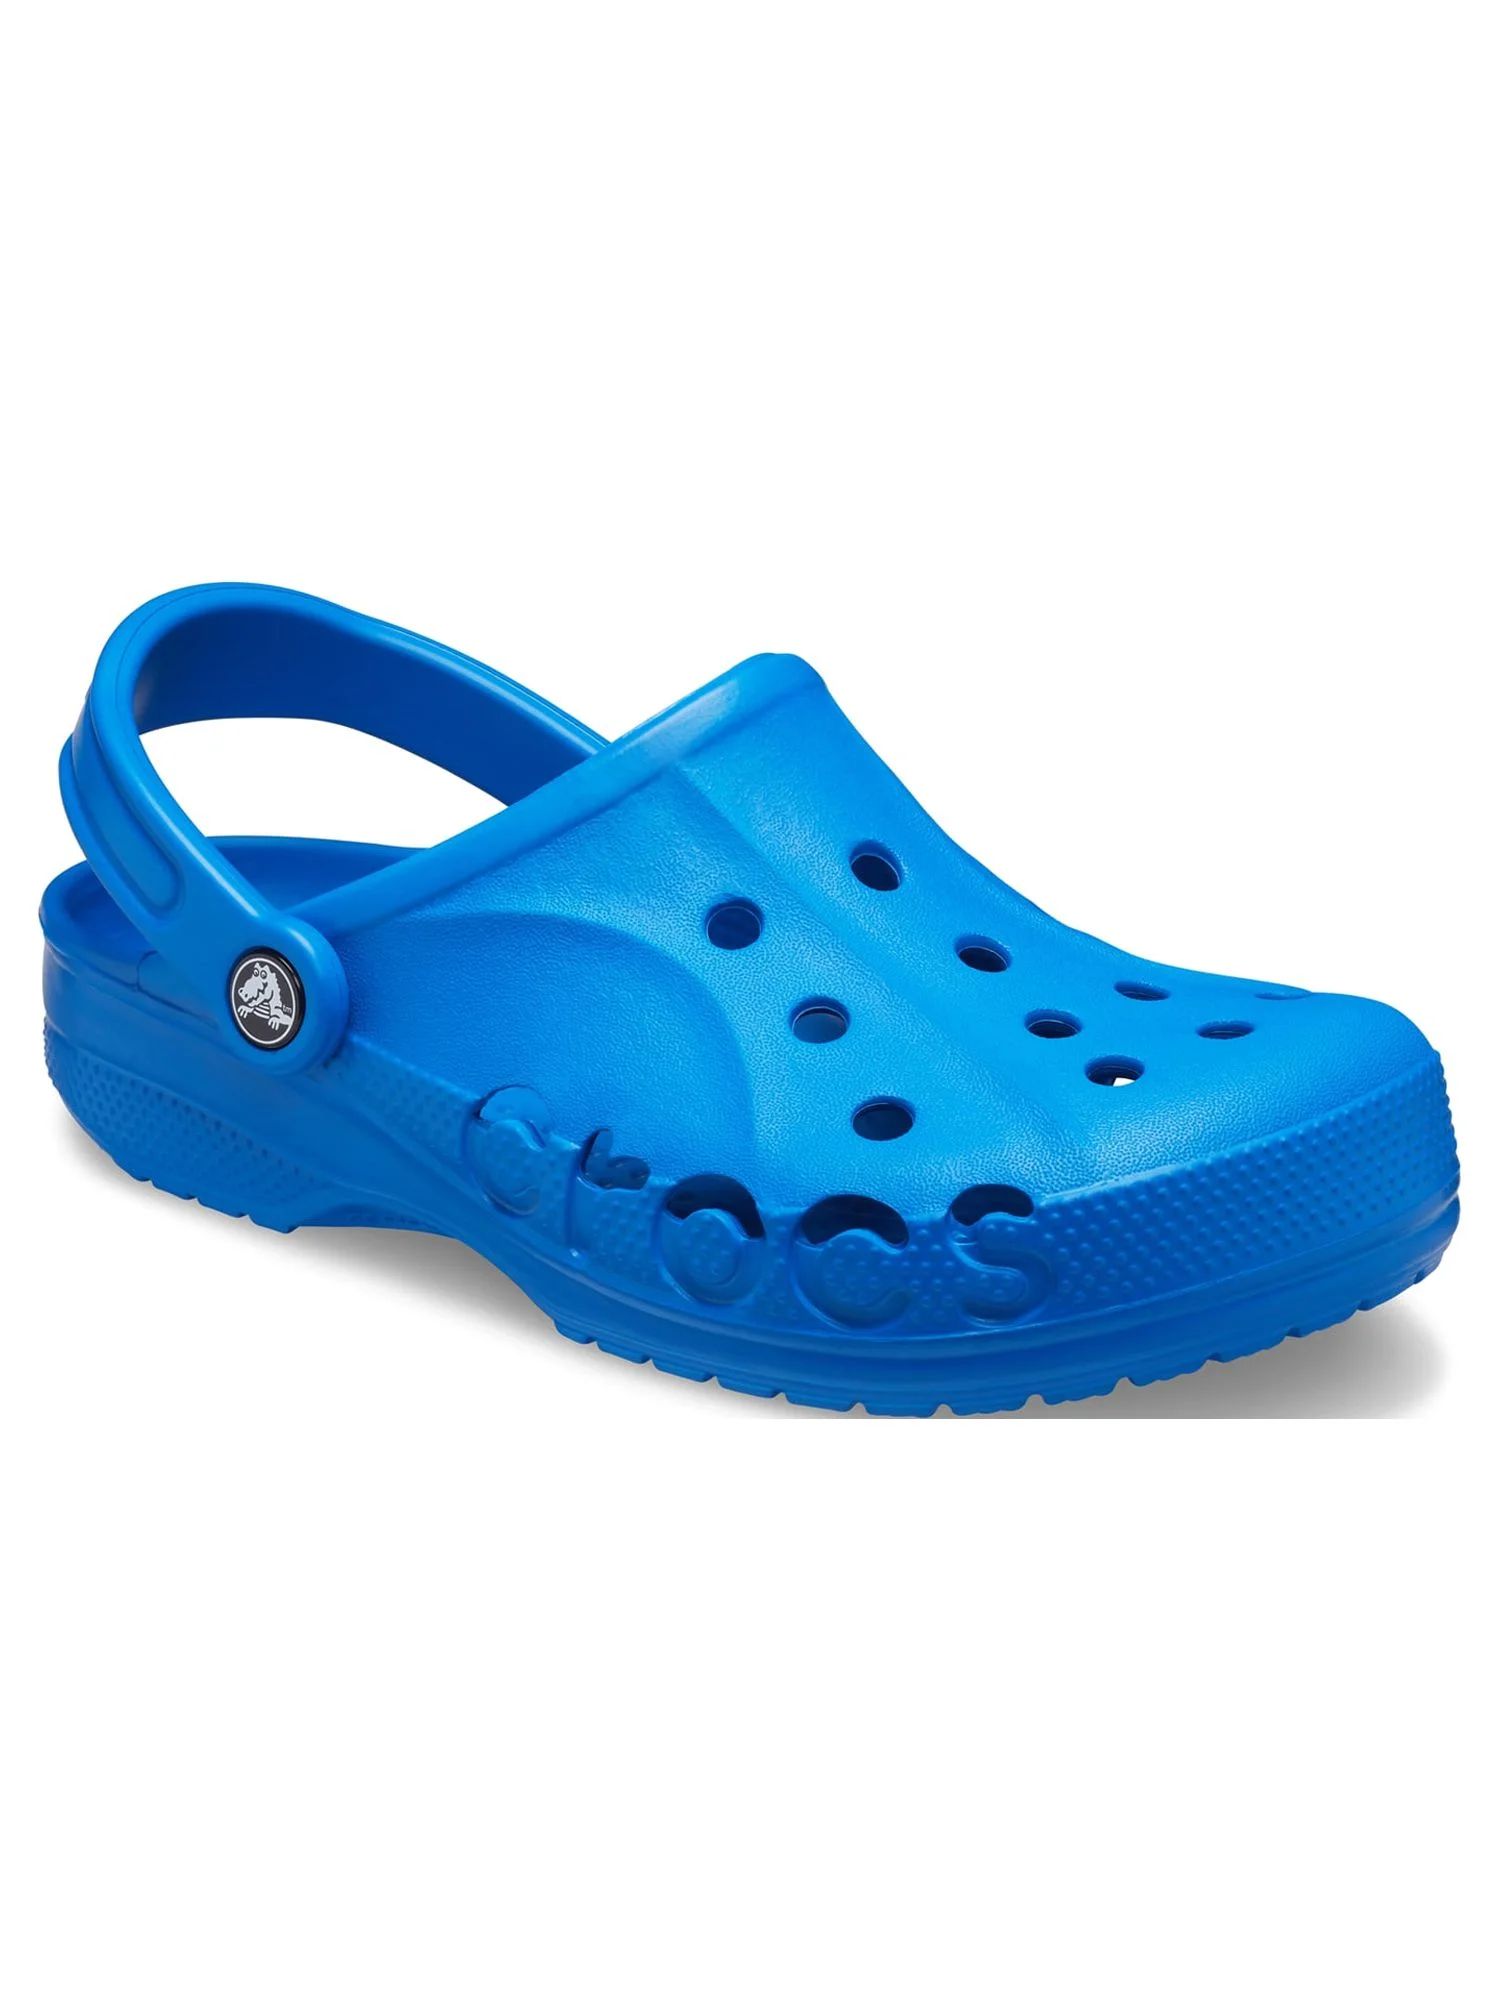 Crocs Men's and Women's Unisex Baya Clog Sandals | Walmart (US)